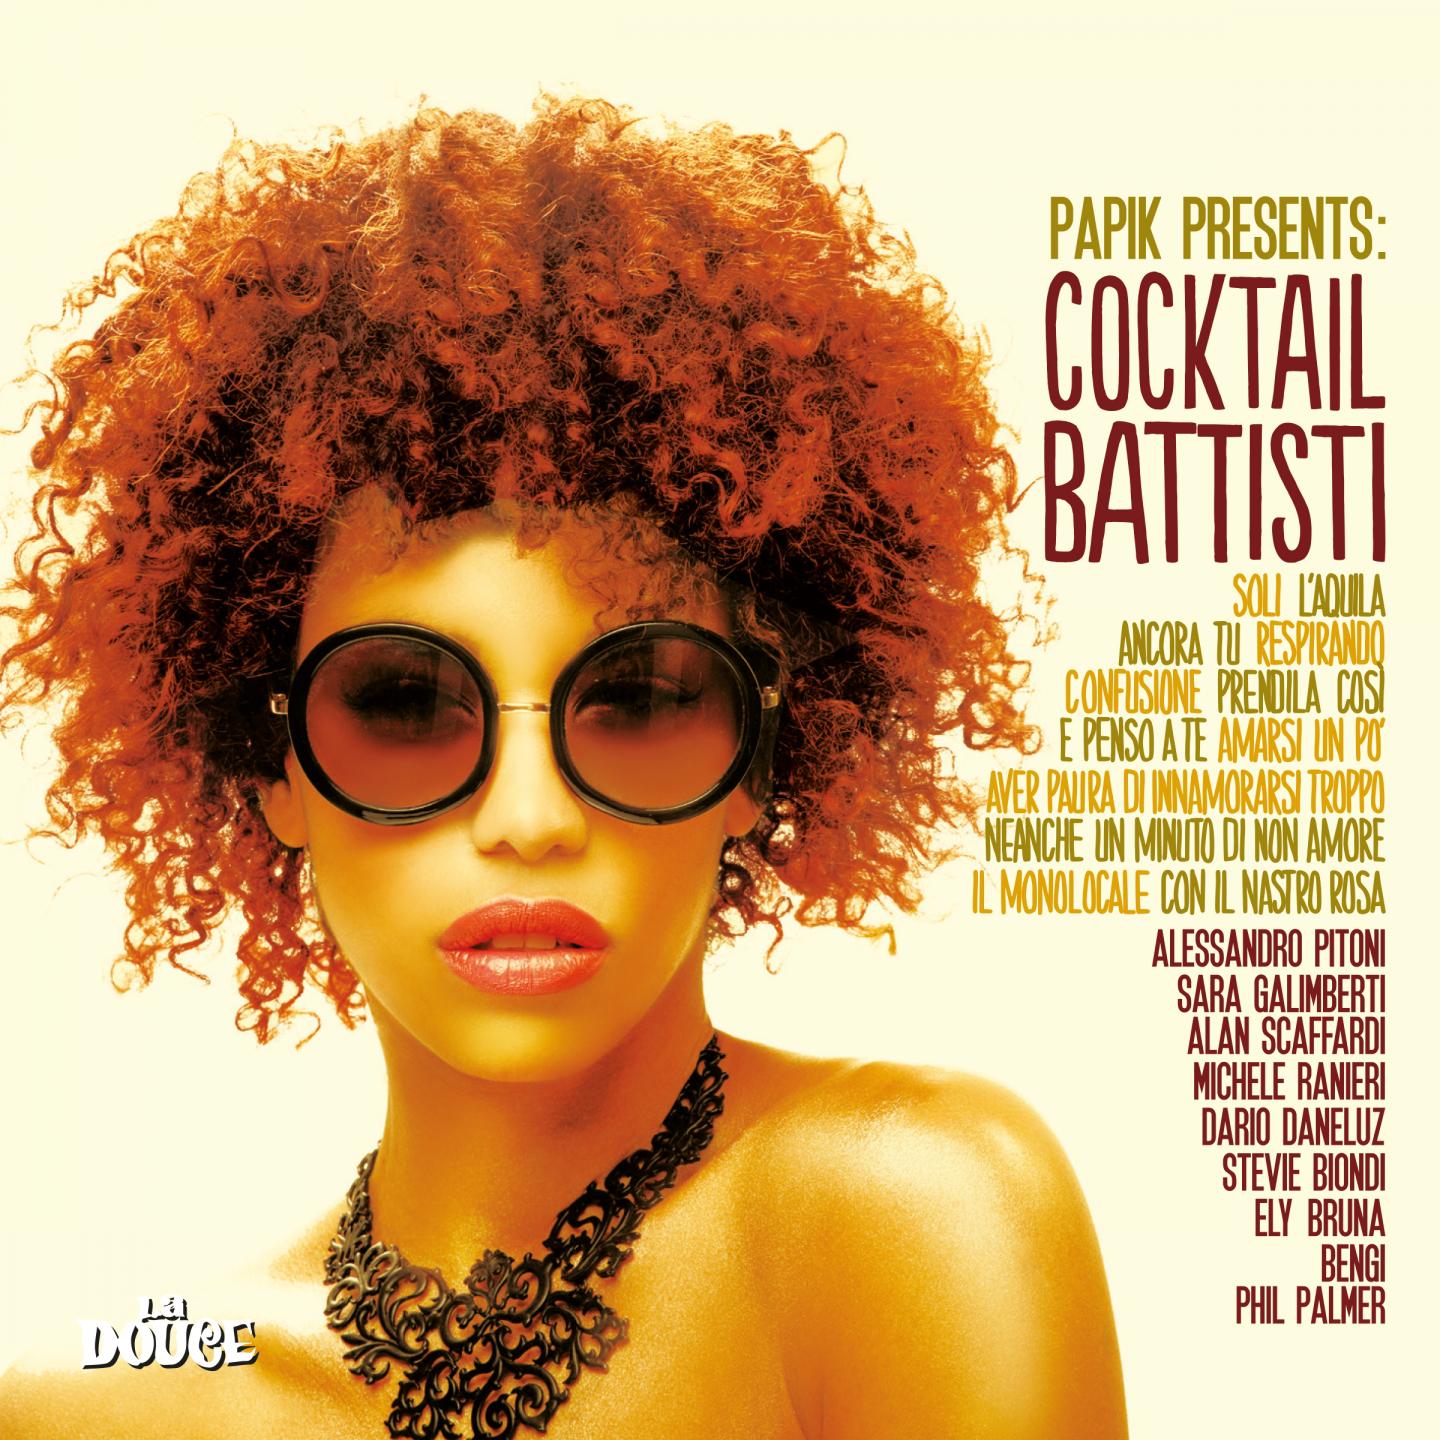 Papik presents: Cocktail Battisti